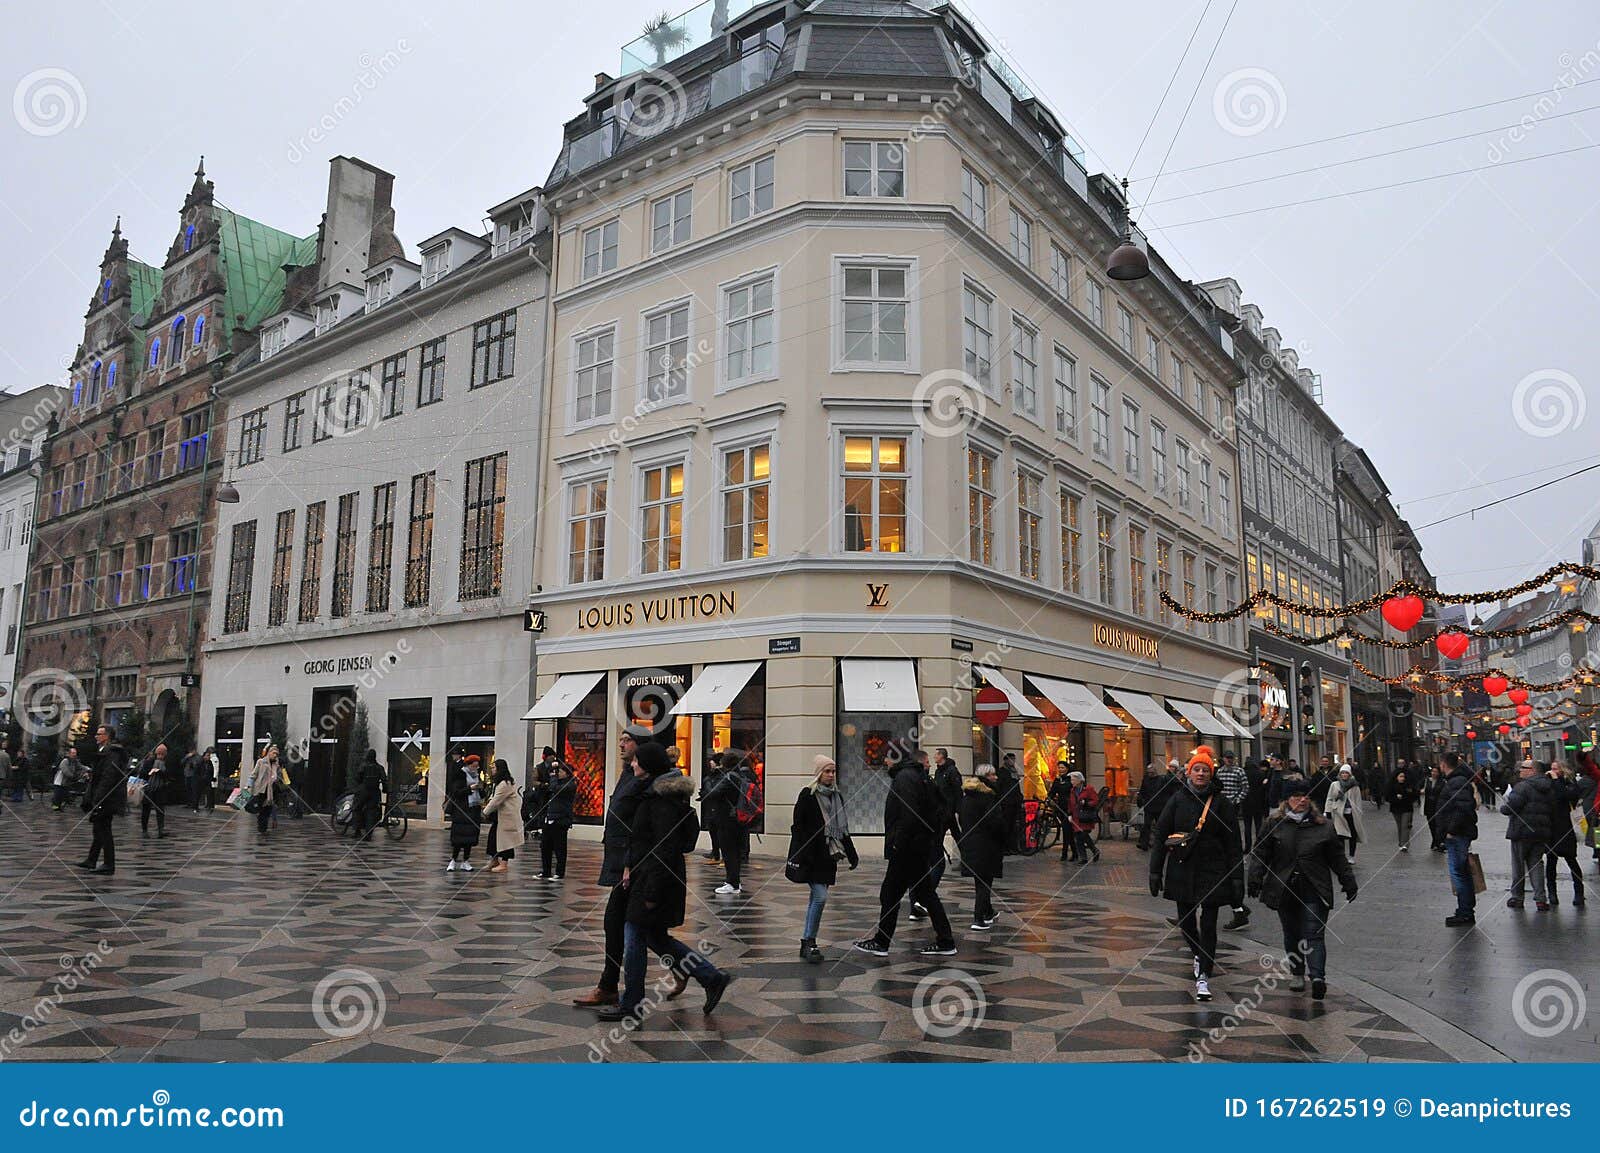 LUIS VUITTON STORE in COPENHAGEN DENMAK Editorial Stock Image - Image of vuitton: 167262519